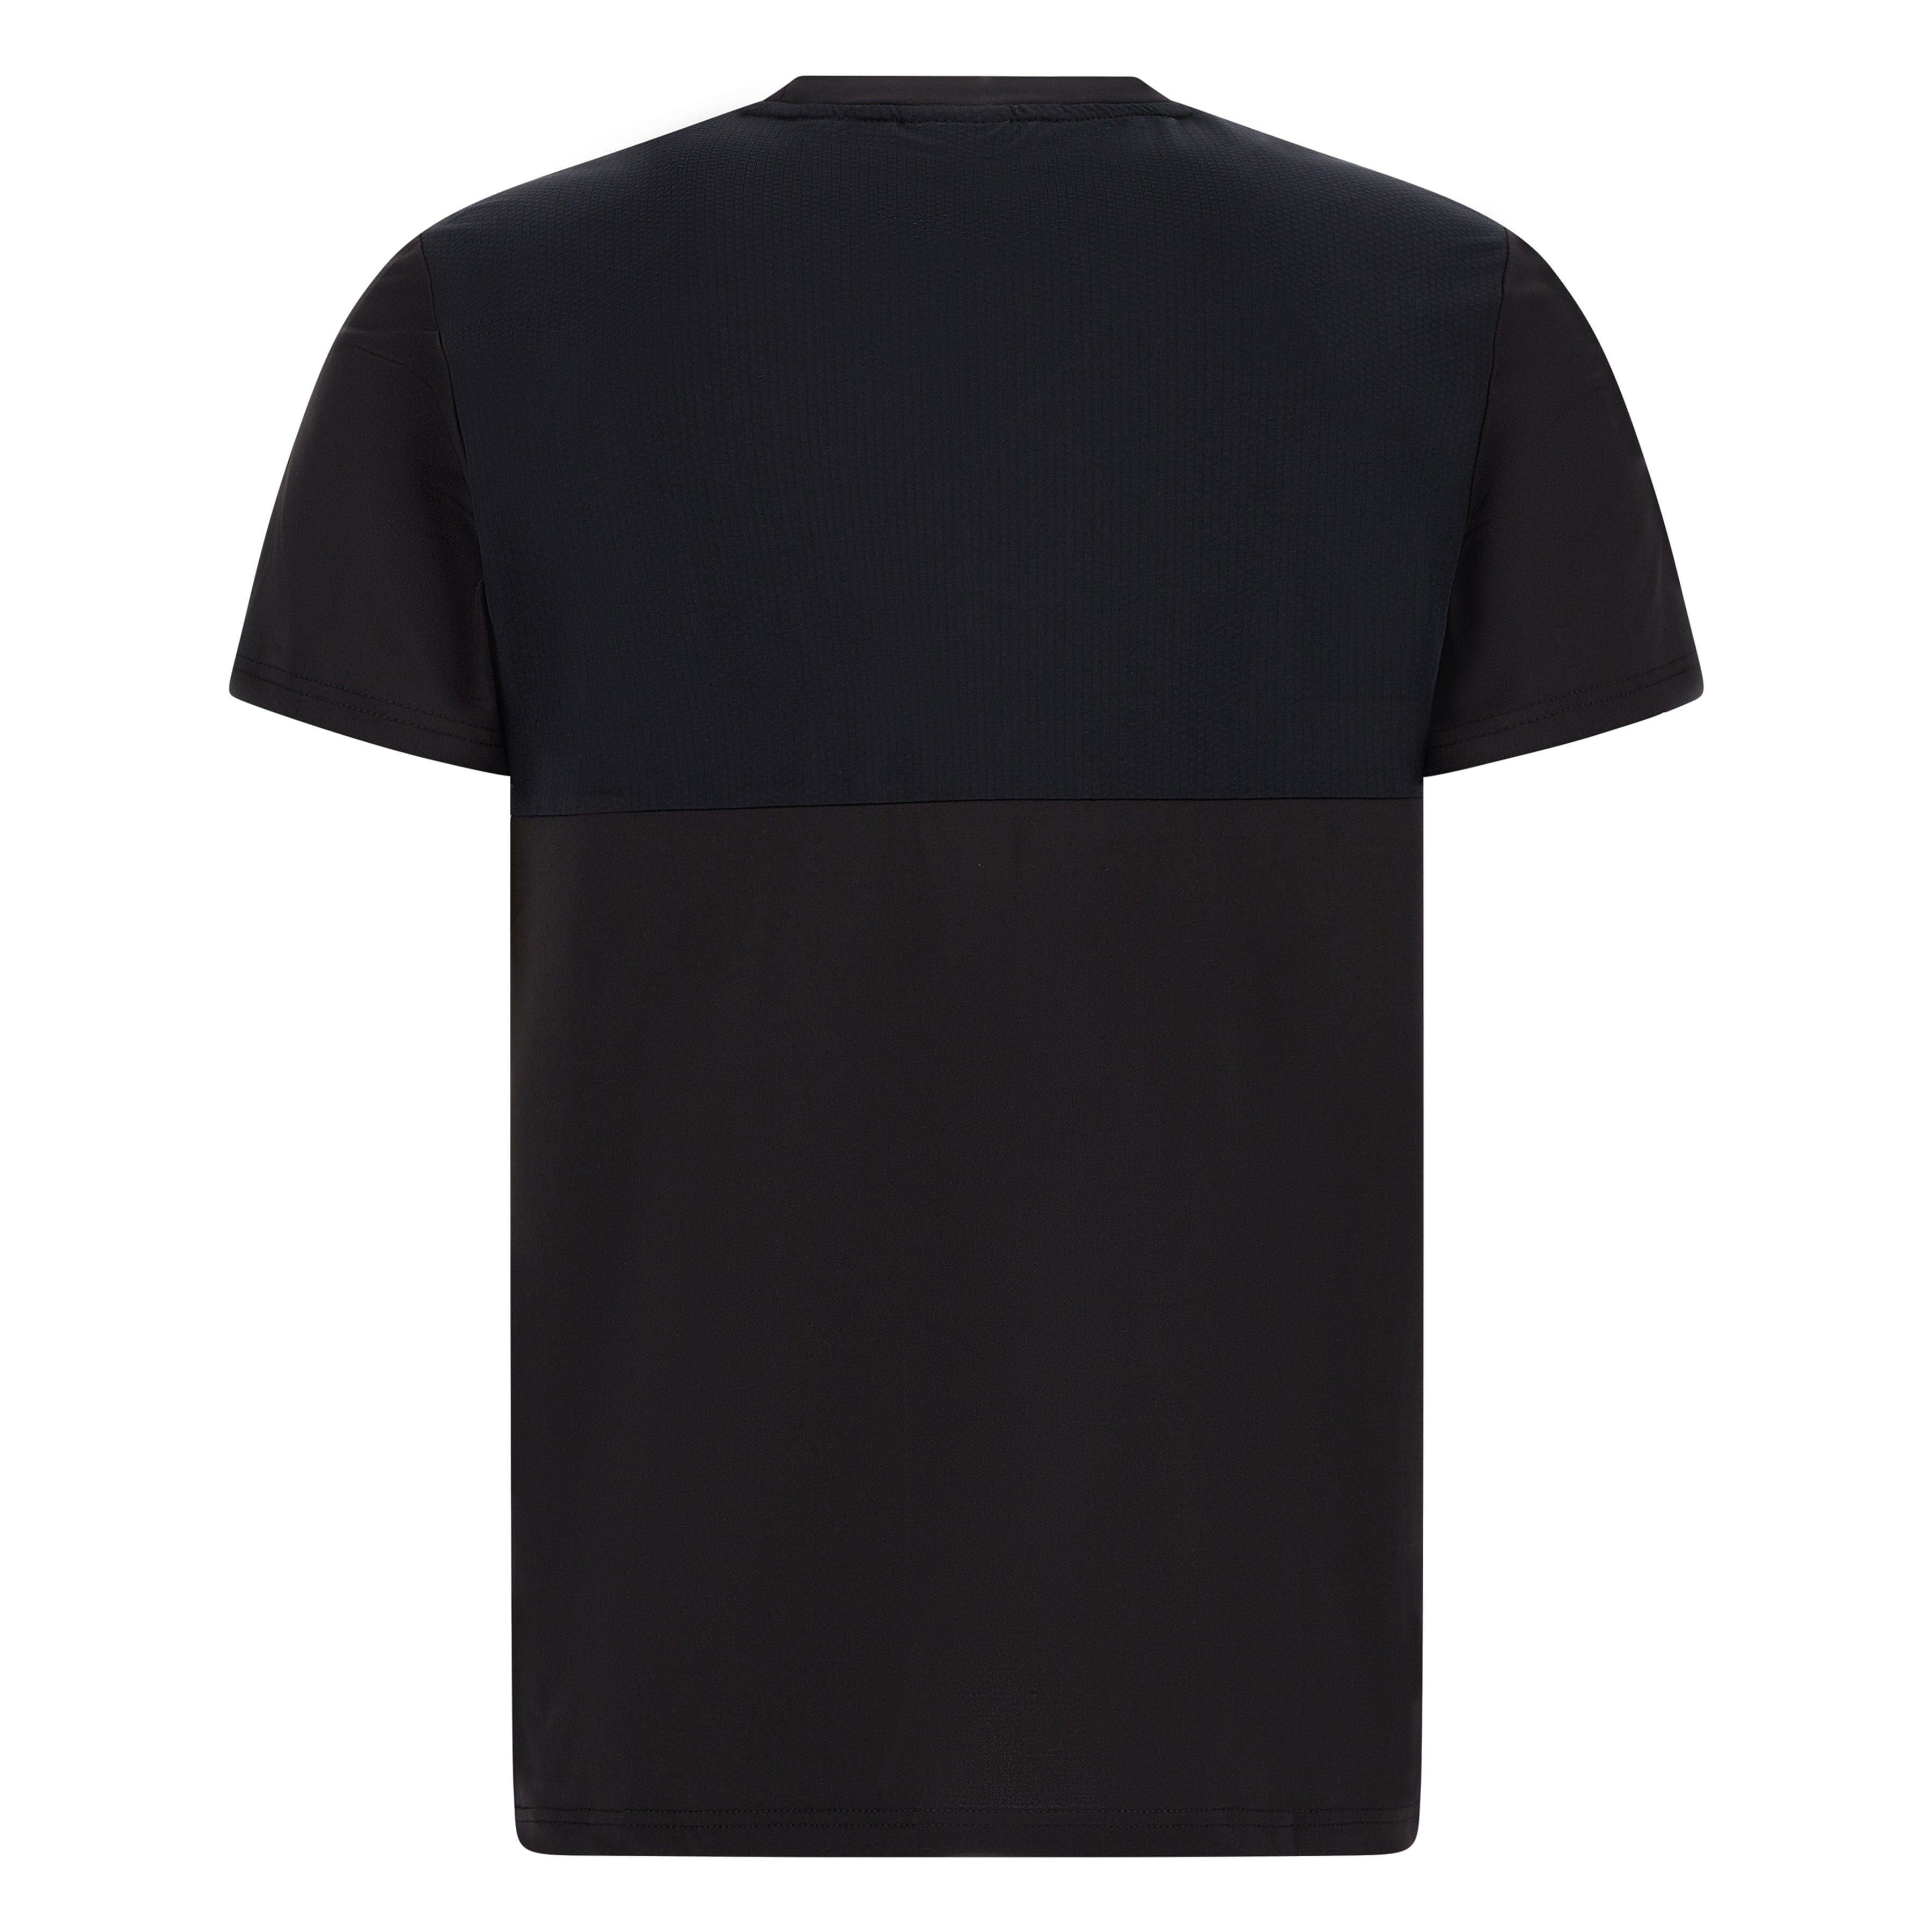 Men's Everyday T Shirt - Black 2